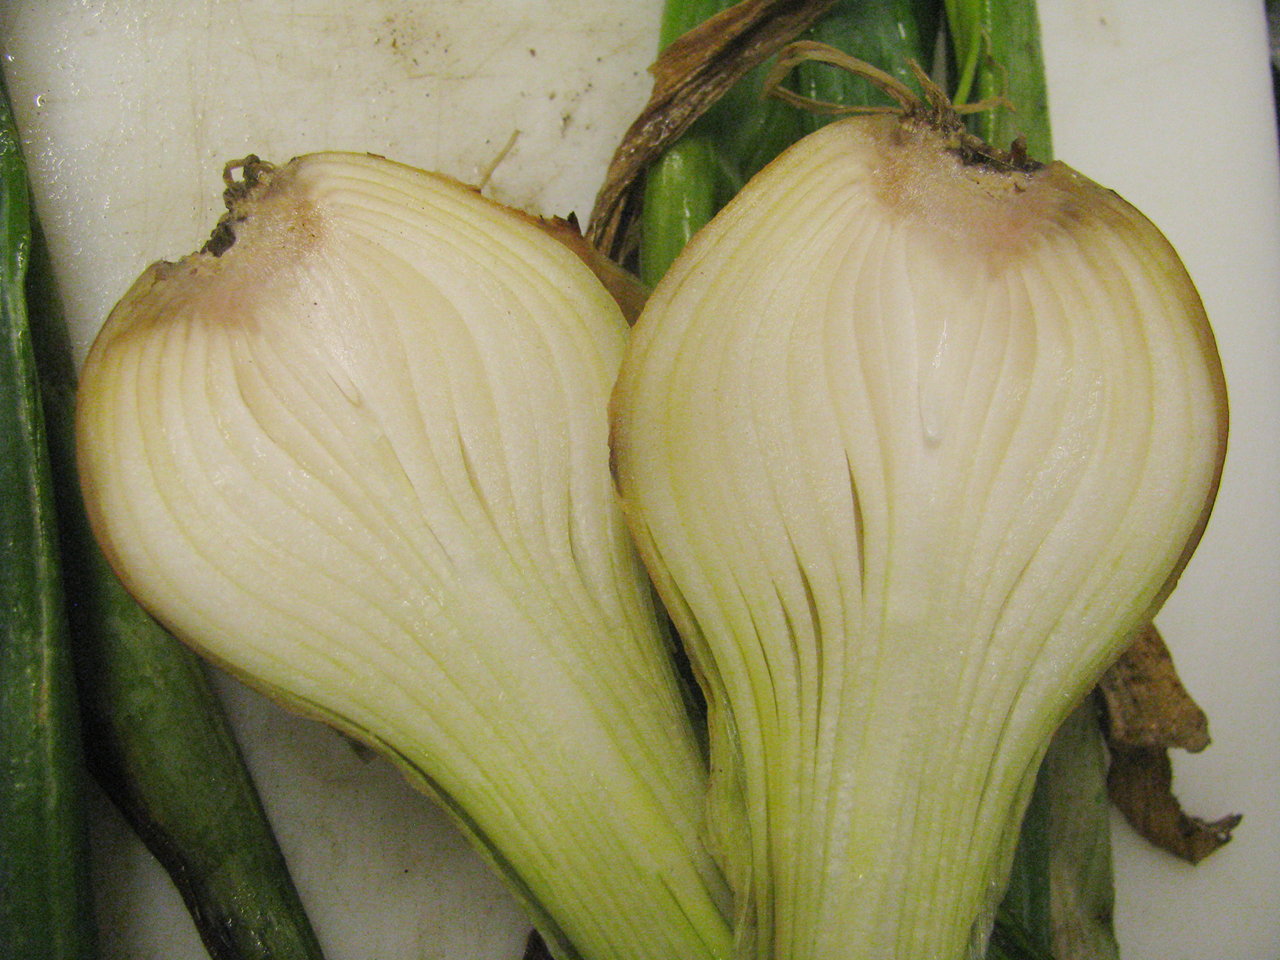 Photo of Fusarium
		basal rot of onion bulbs of the cultivar Gunnison caused by Fusarium
		oxysporum f. sp. cepae.